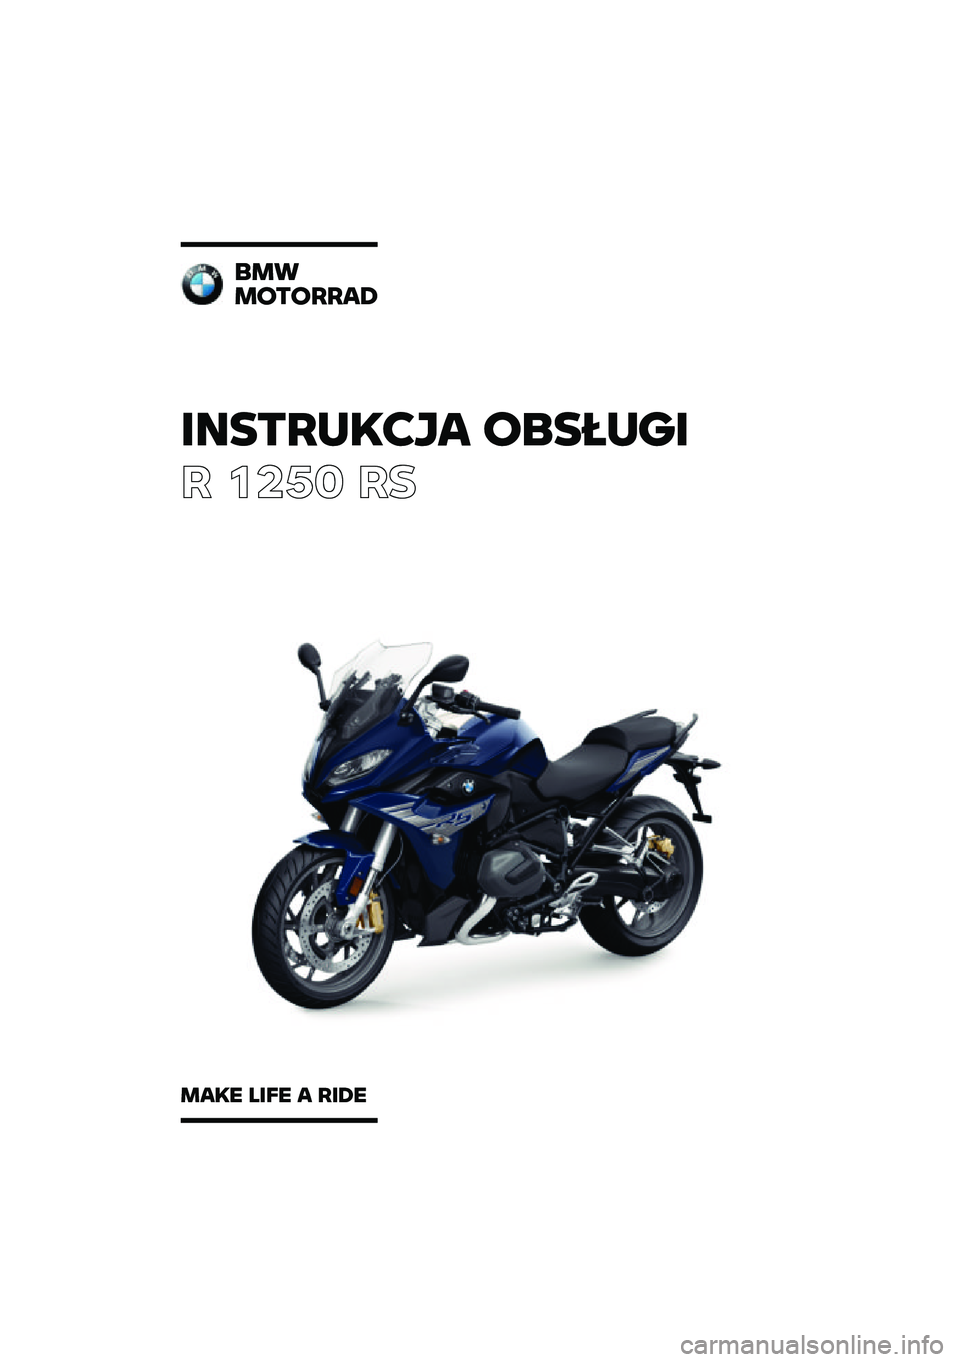 BMW MOTORRAD R 1250 RS 2020  Instrukcja obsługi (in Polish) �������\b�	�
� �\f�
�����
� ����	 ��
�
��
��\f��\f����
���\b� ���� � ���� 